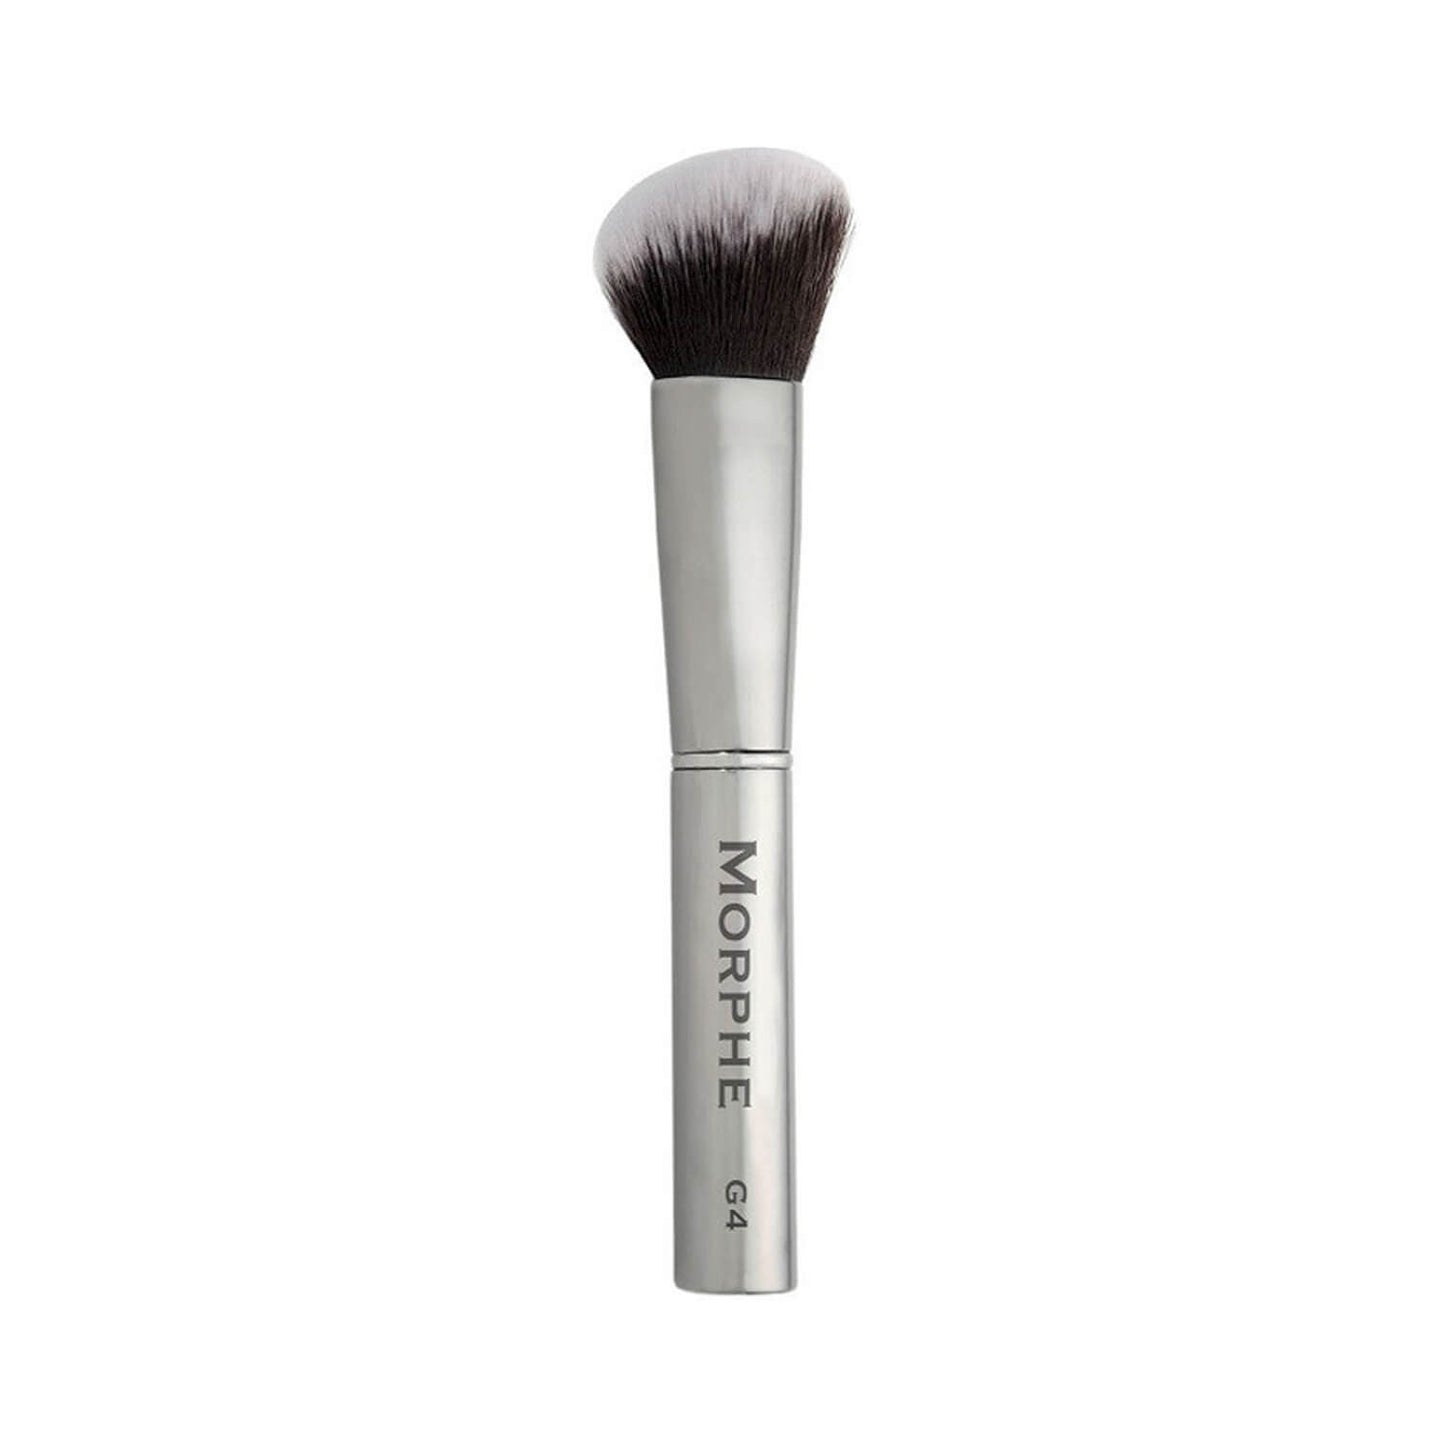 Morphe Cosmetics G4 Angle Blush Brush